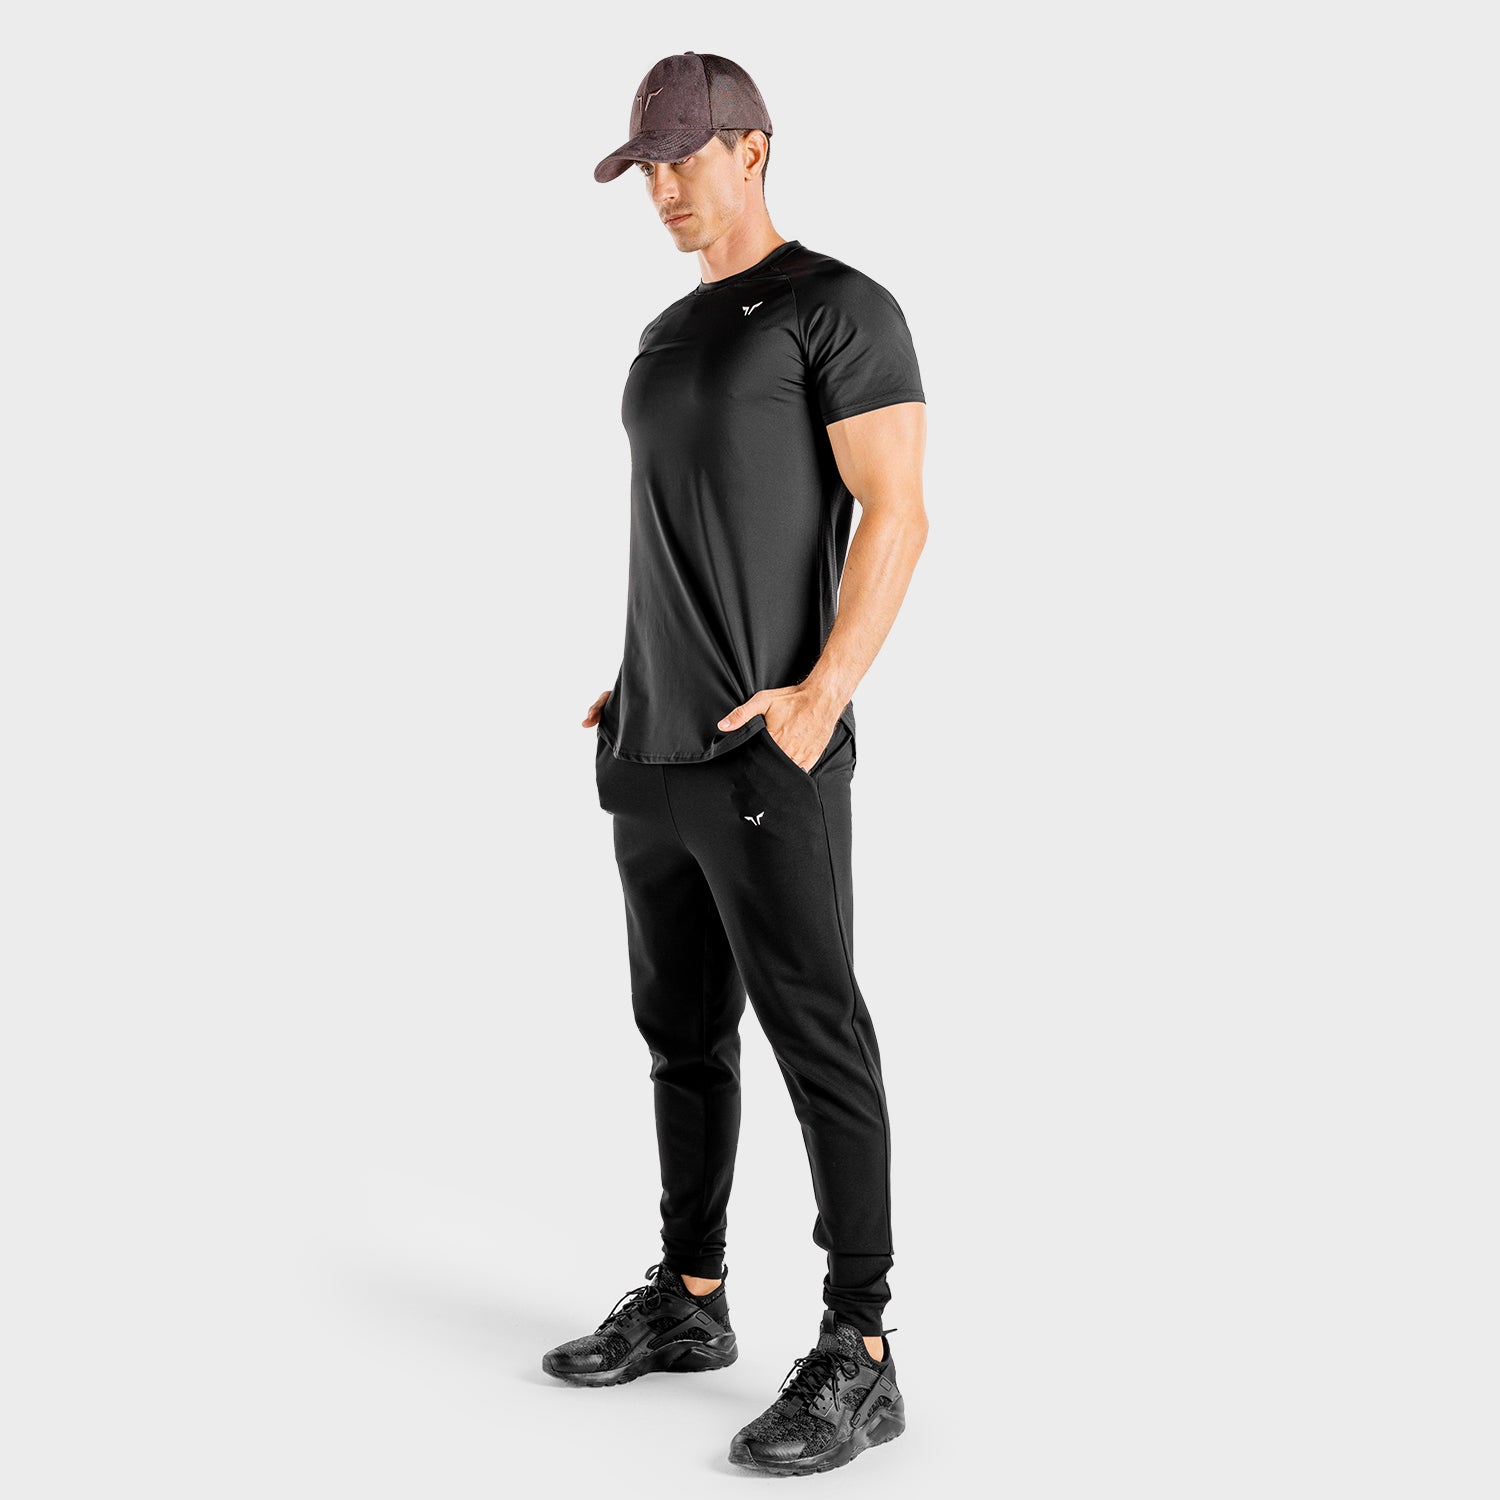 SQUATWOLF - Wolf Trucker Cap - Black - - Gym Cap - Unisex Workout Clothes